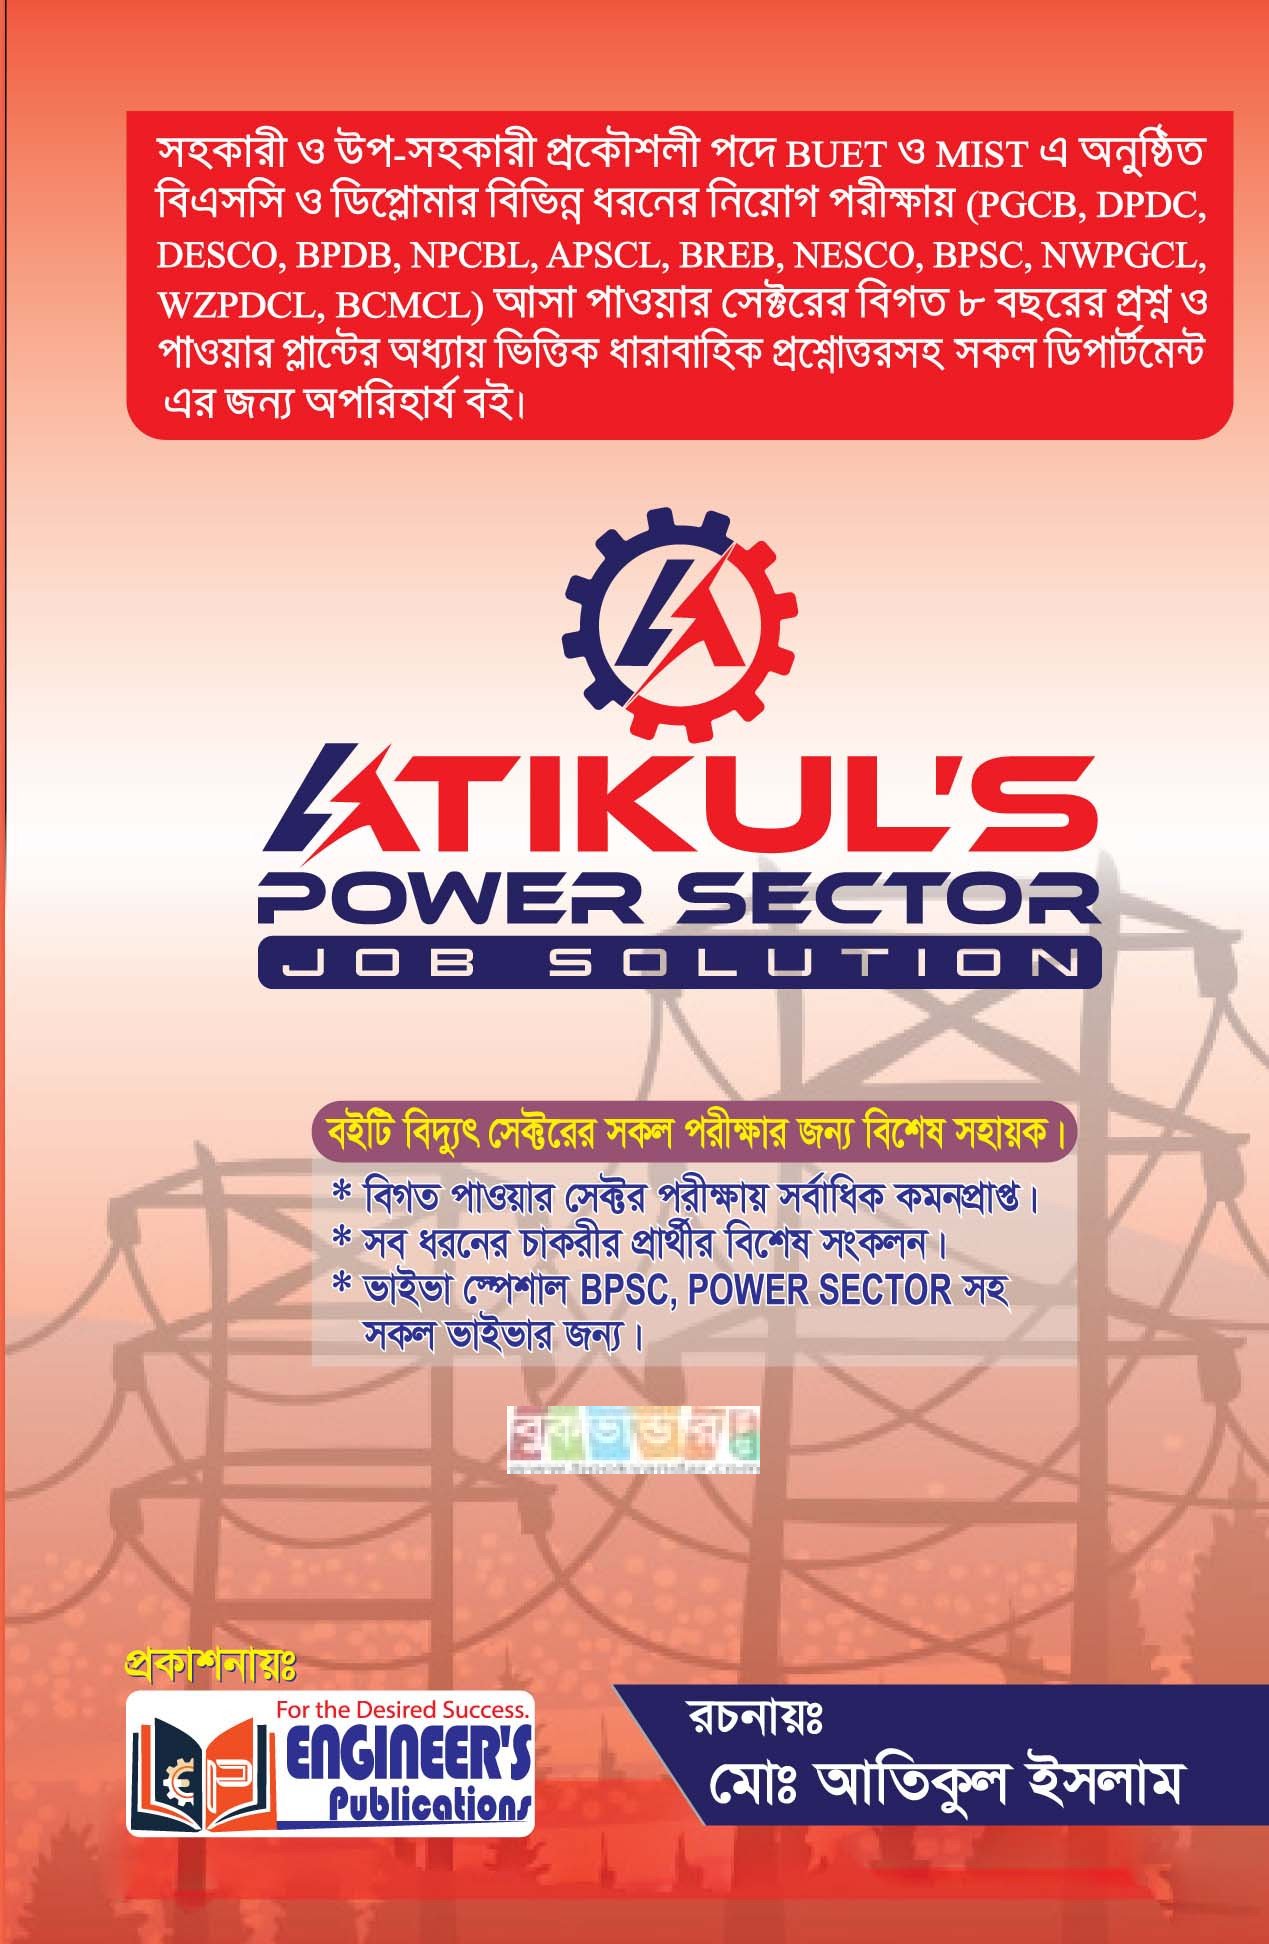 ATIKUL'S POWER SECTOR JOB SOLUTION